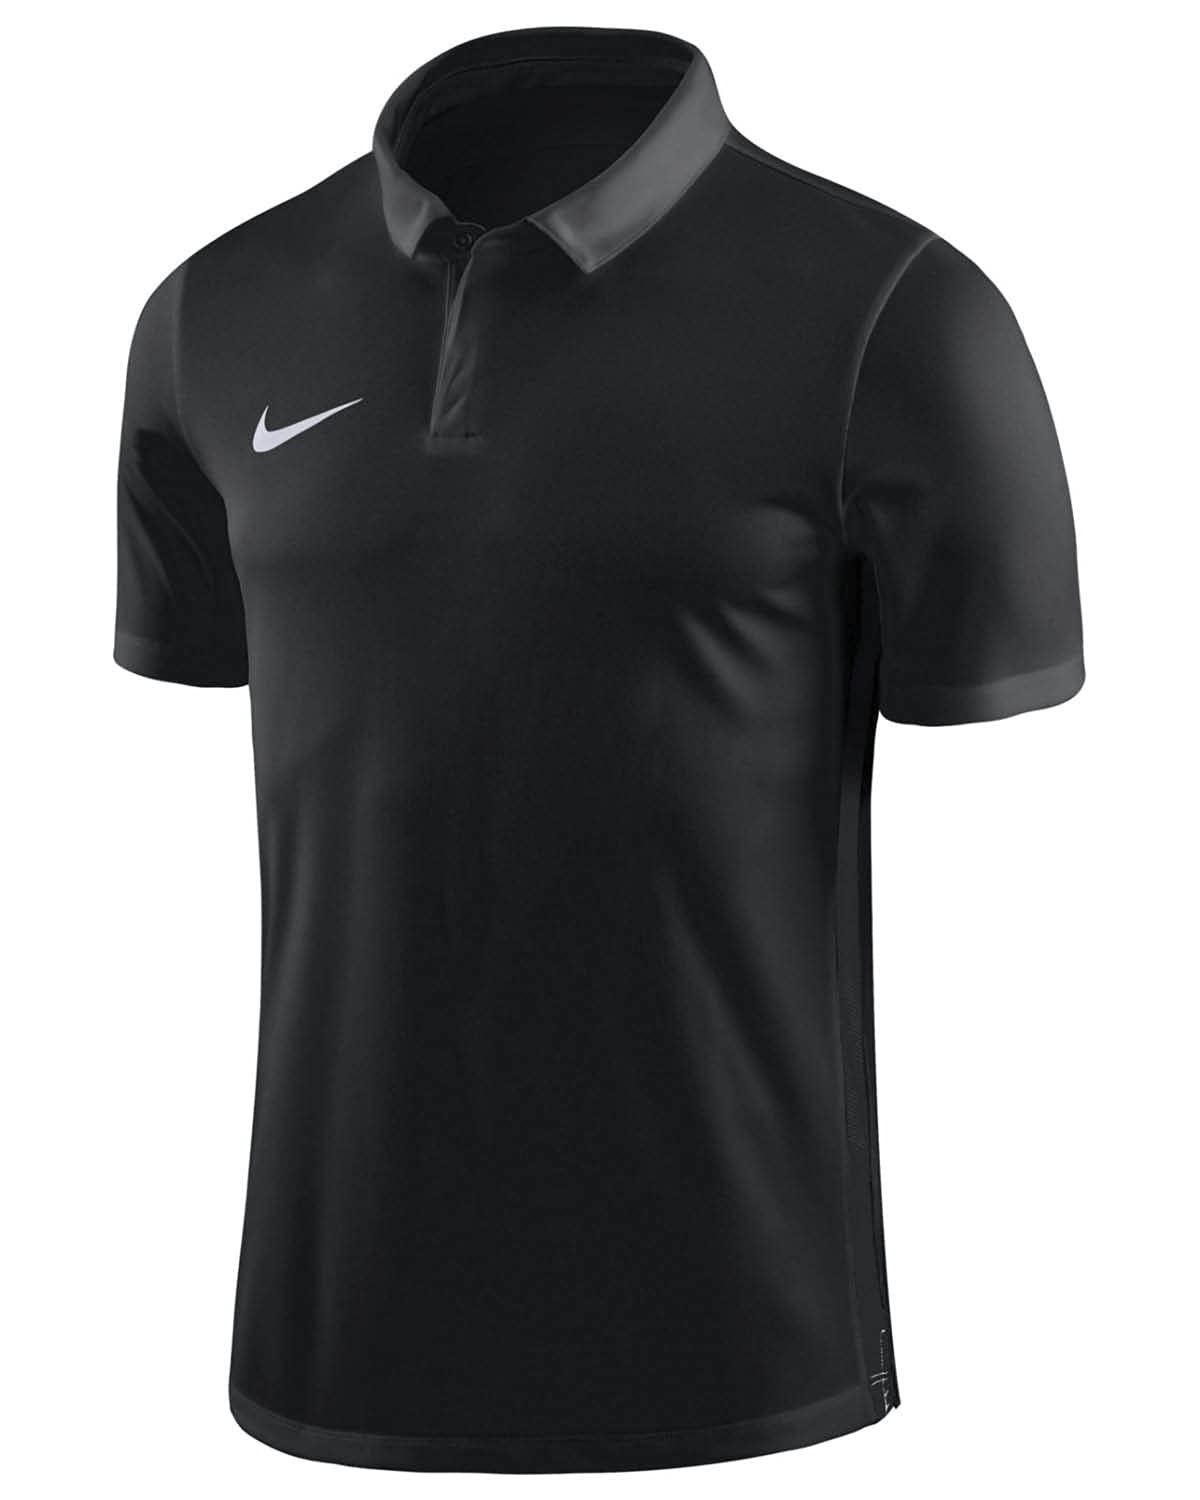 Nike Herren Academy 18 Poloshirt, Black/Anthracite/White, S